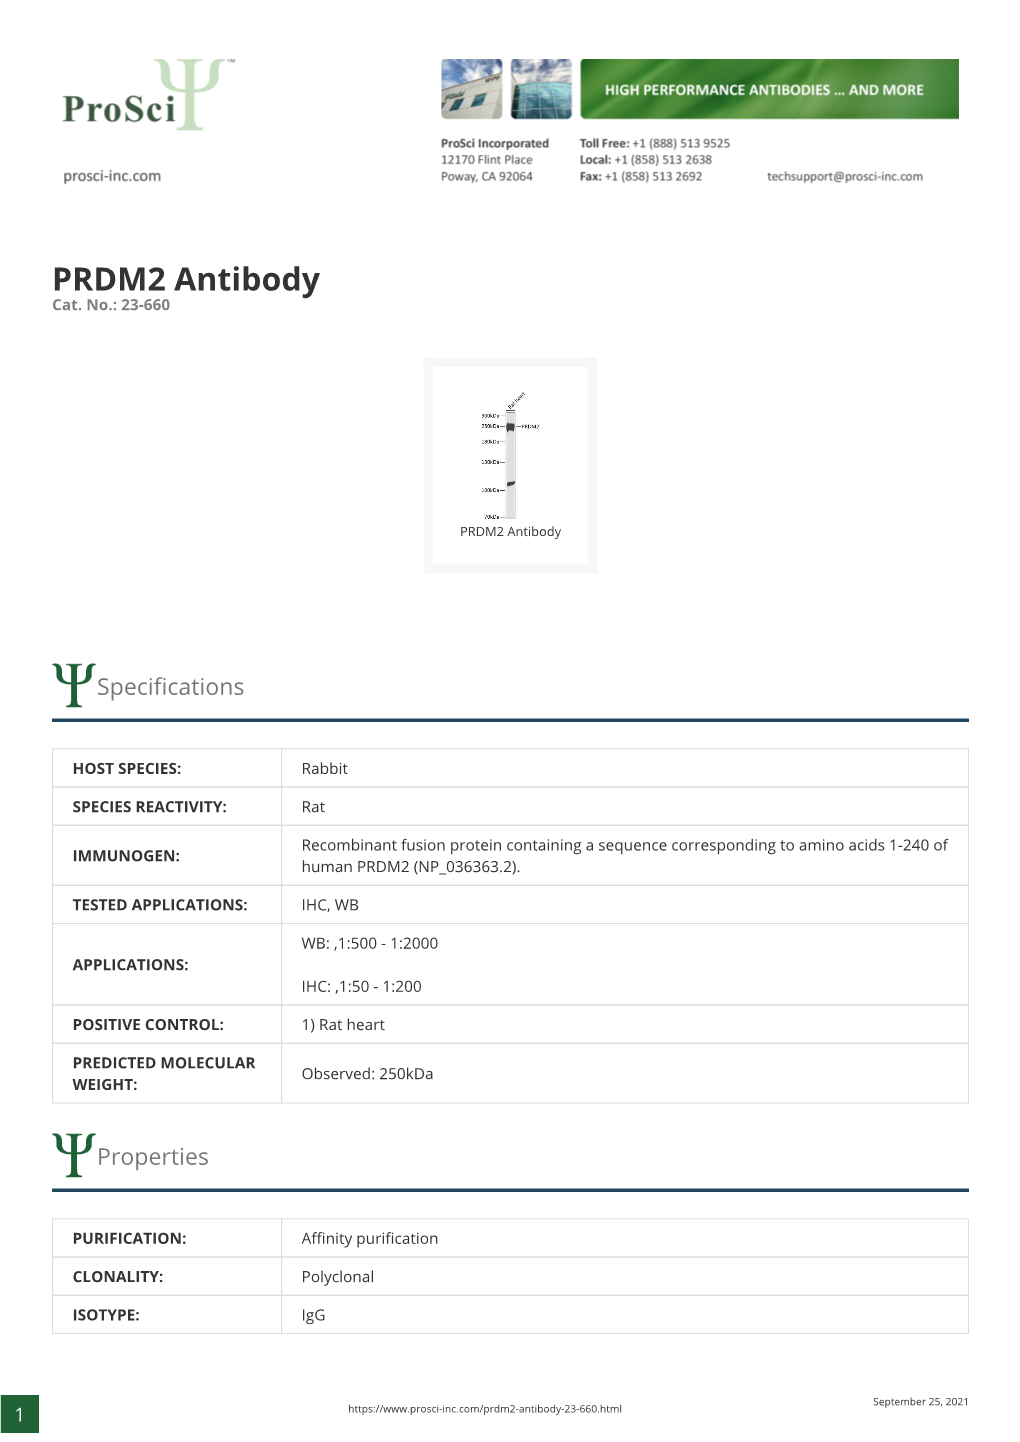 PRDM2 Antibody Cat